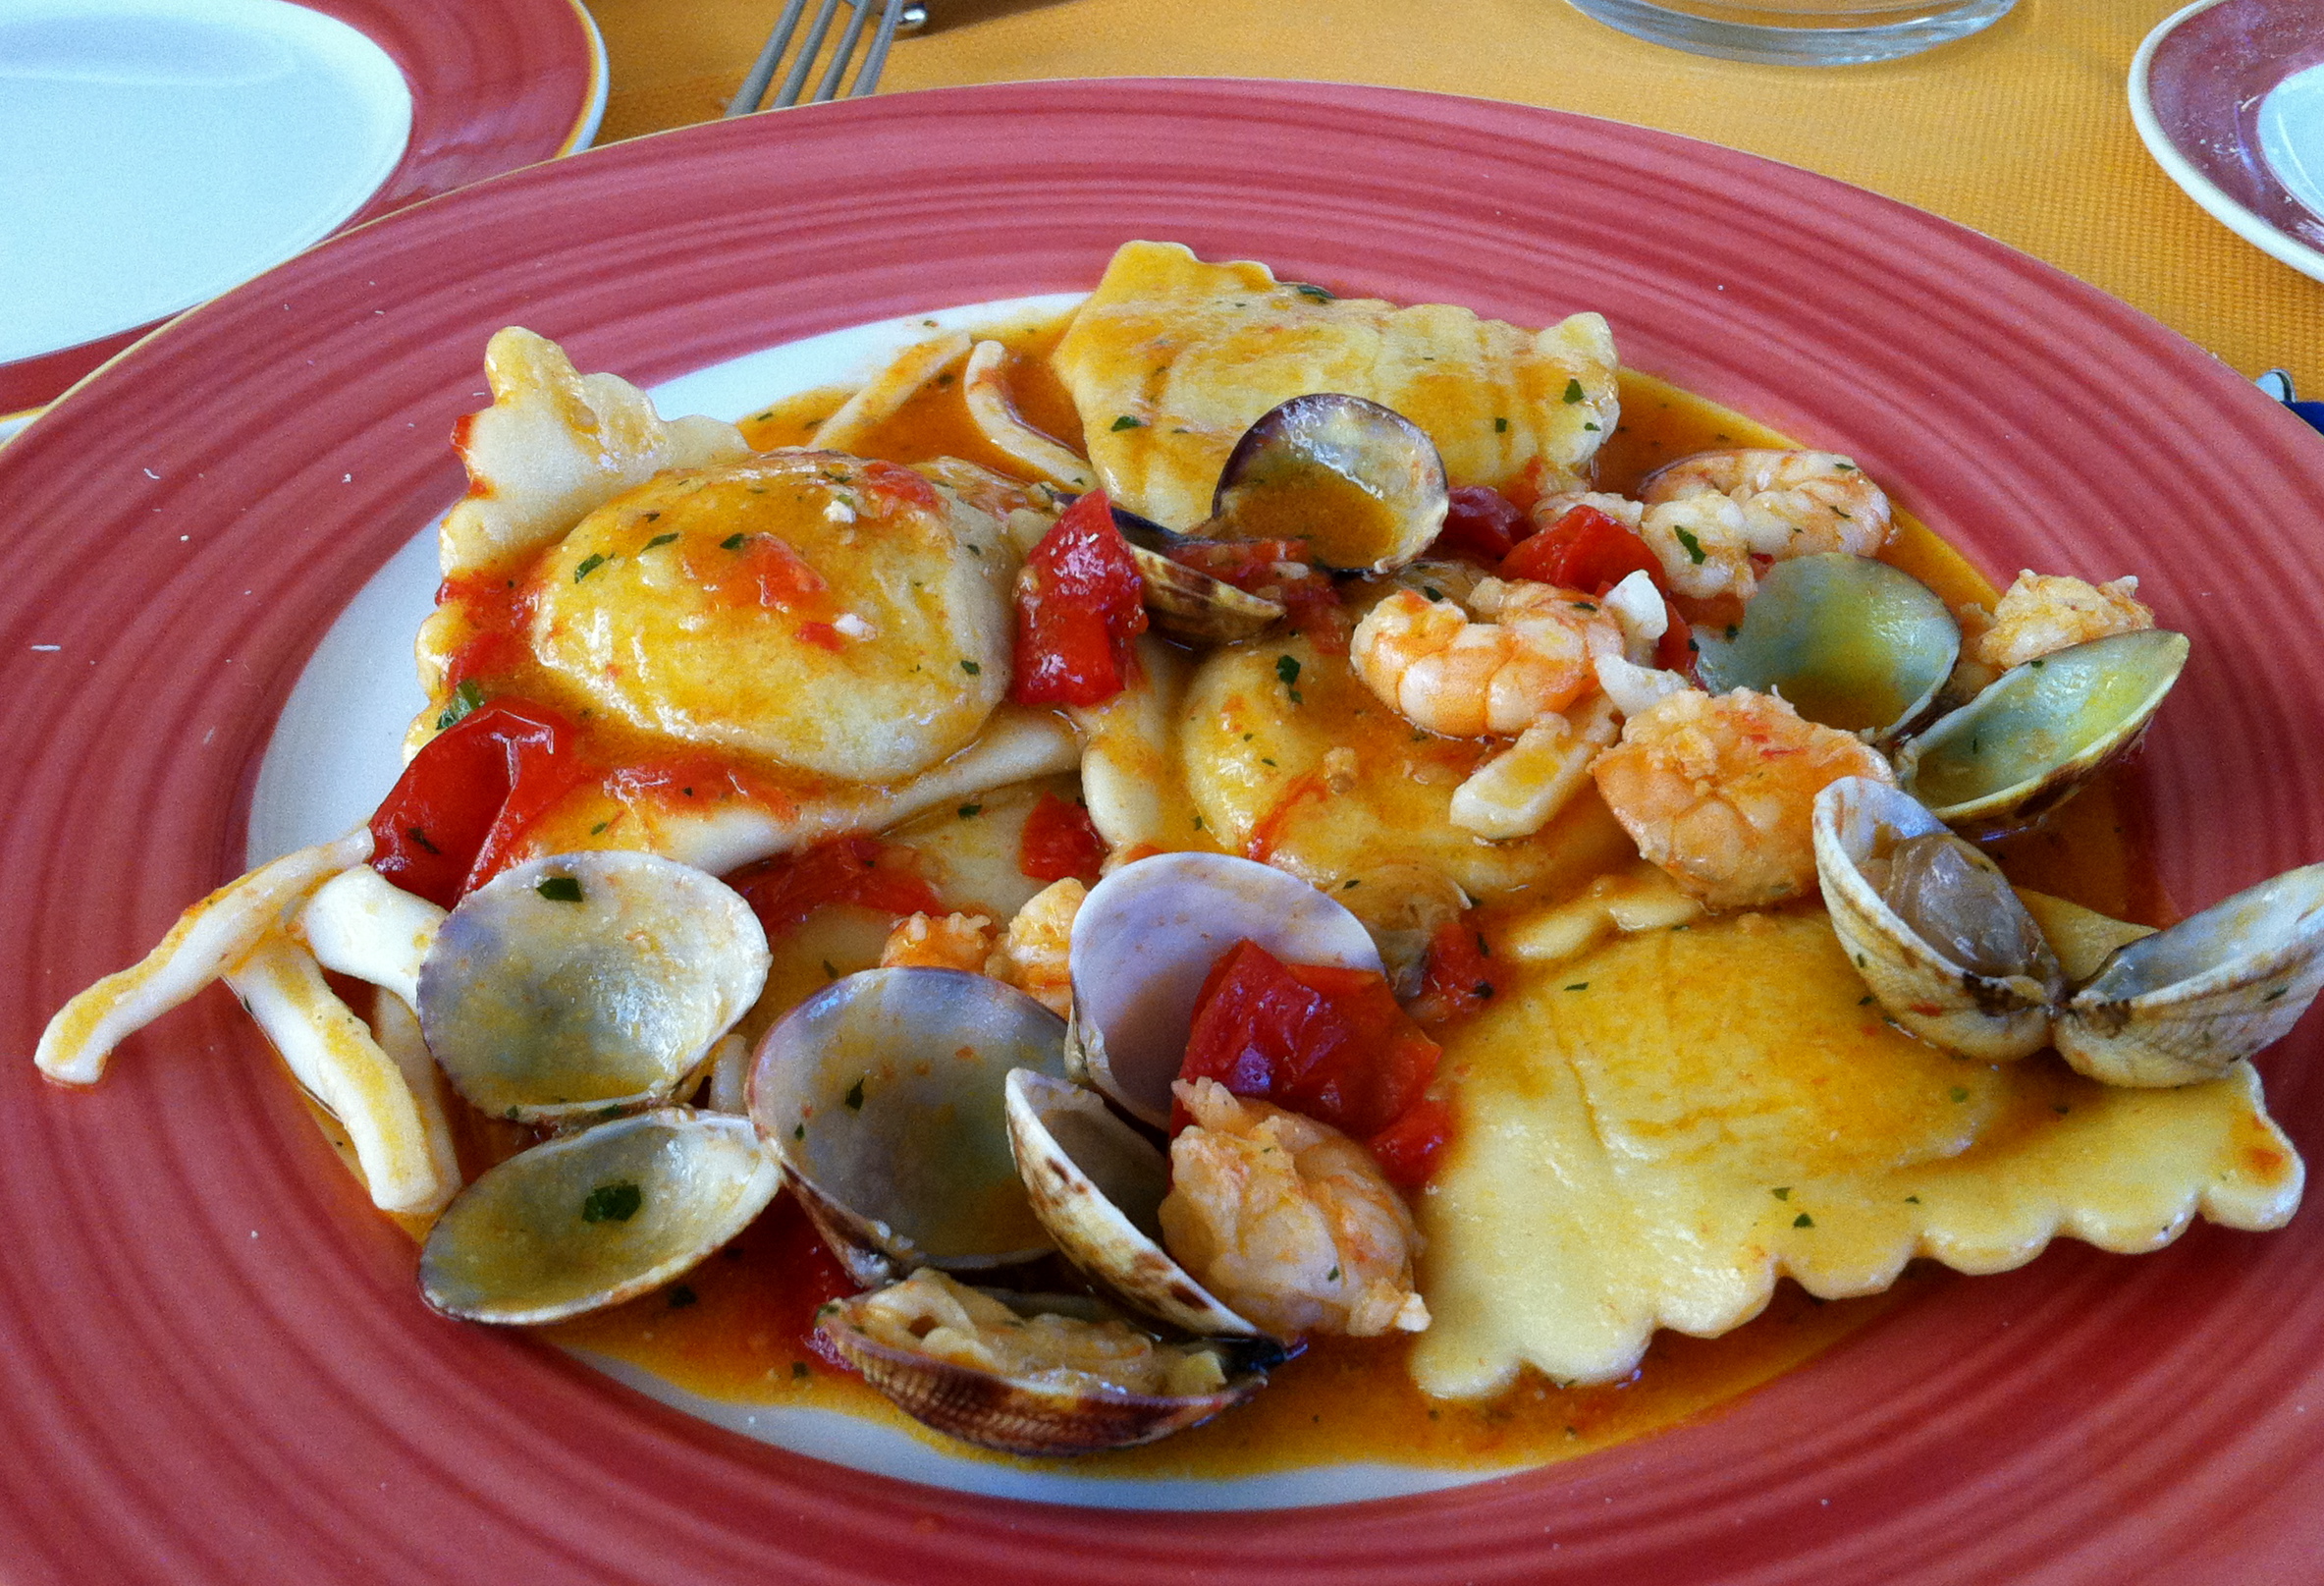 Ravioli with clams, shrimp, and calamari. O dio mio!